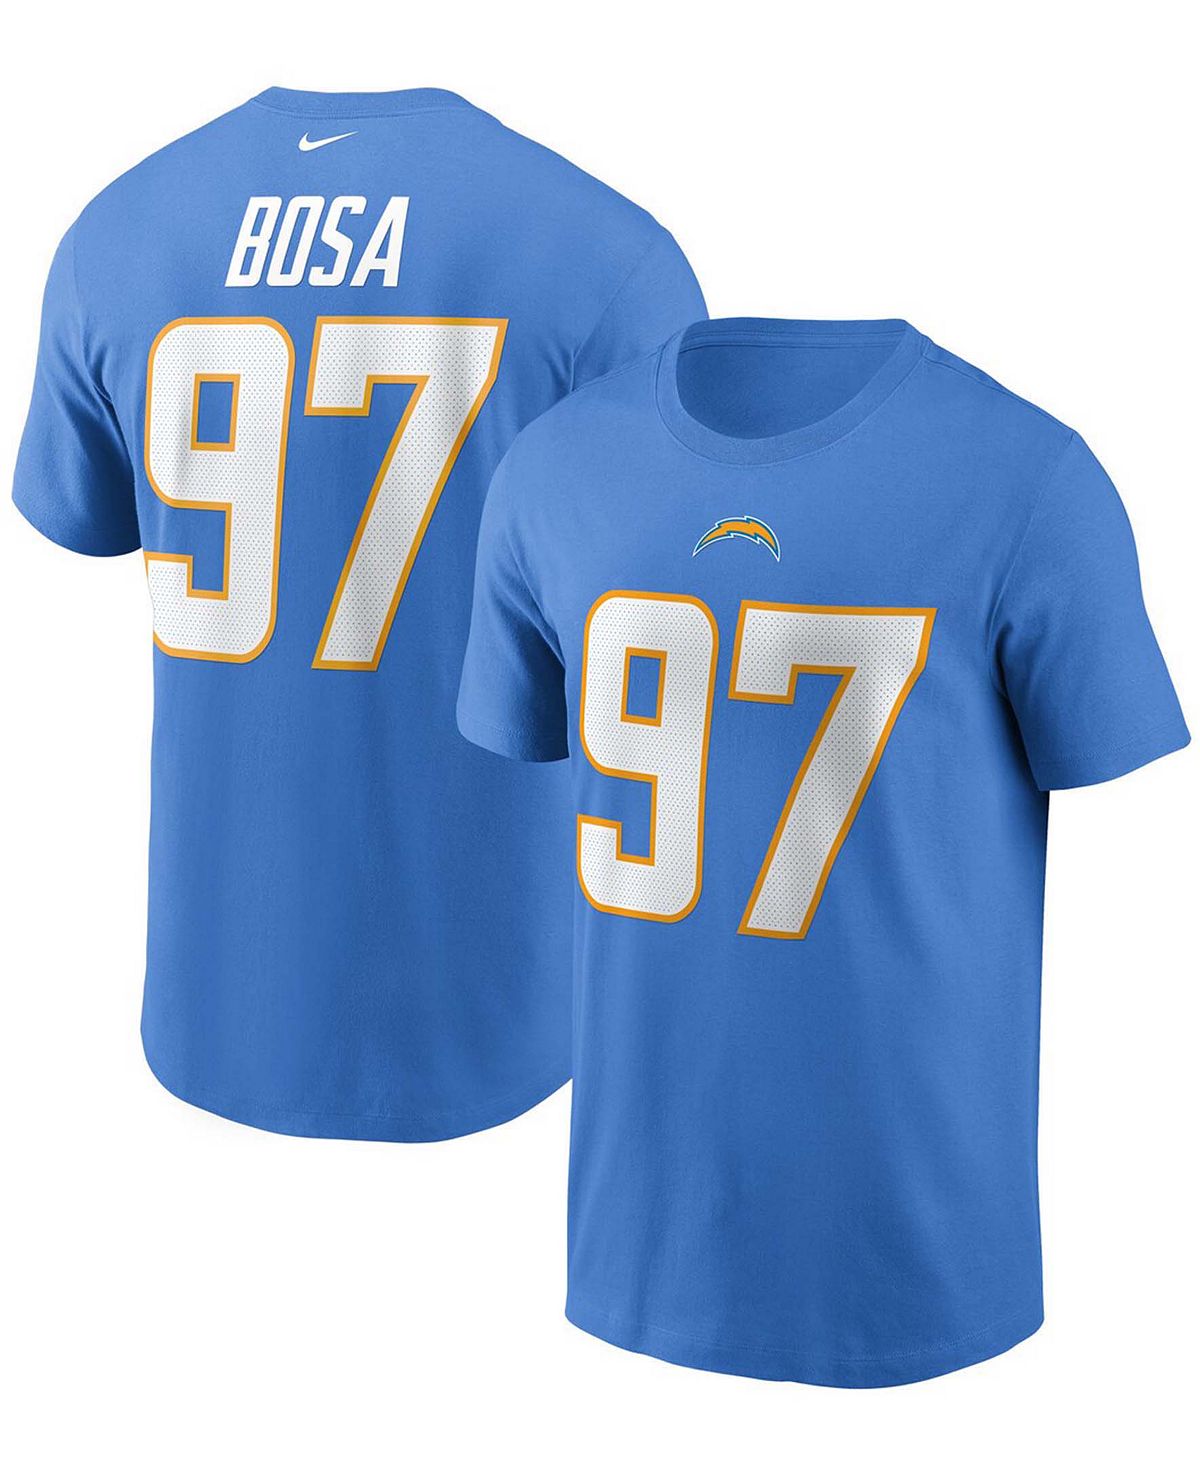 Мужская футболка Joey Bosa Powder Blue Los Angeles Chargers с именем и номером Nike